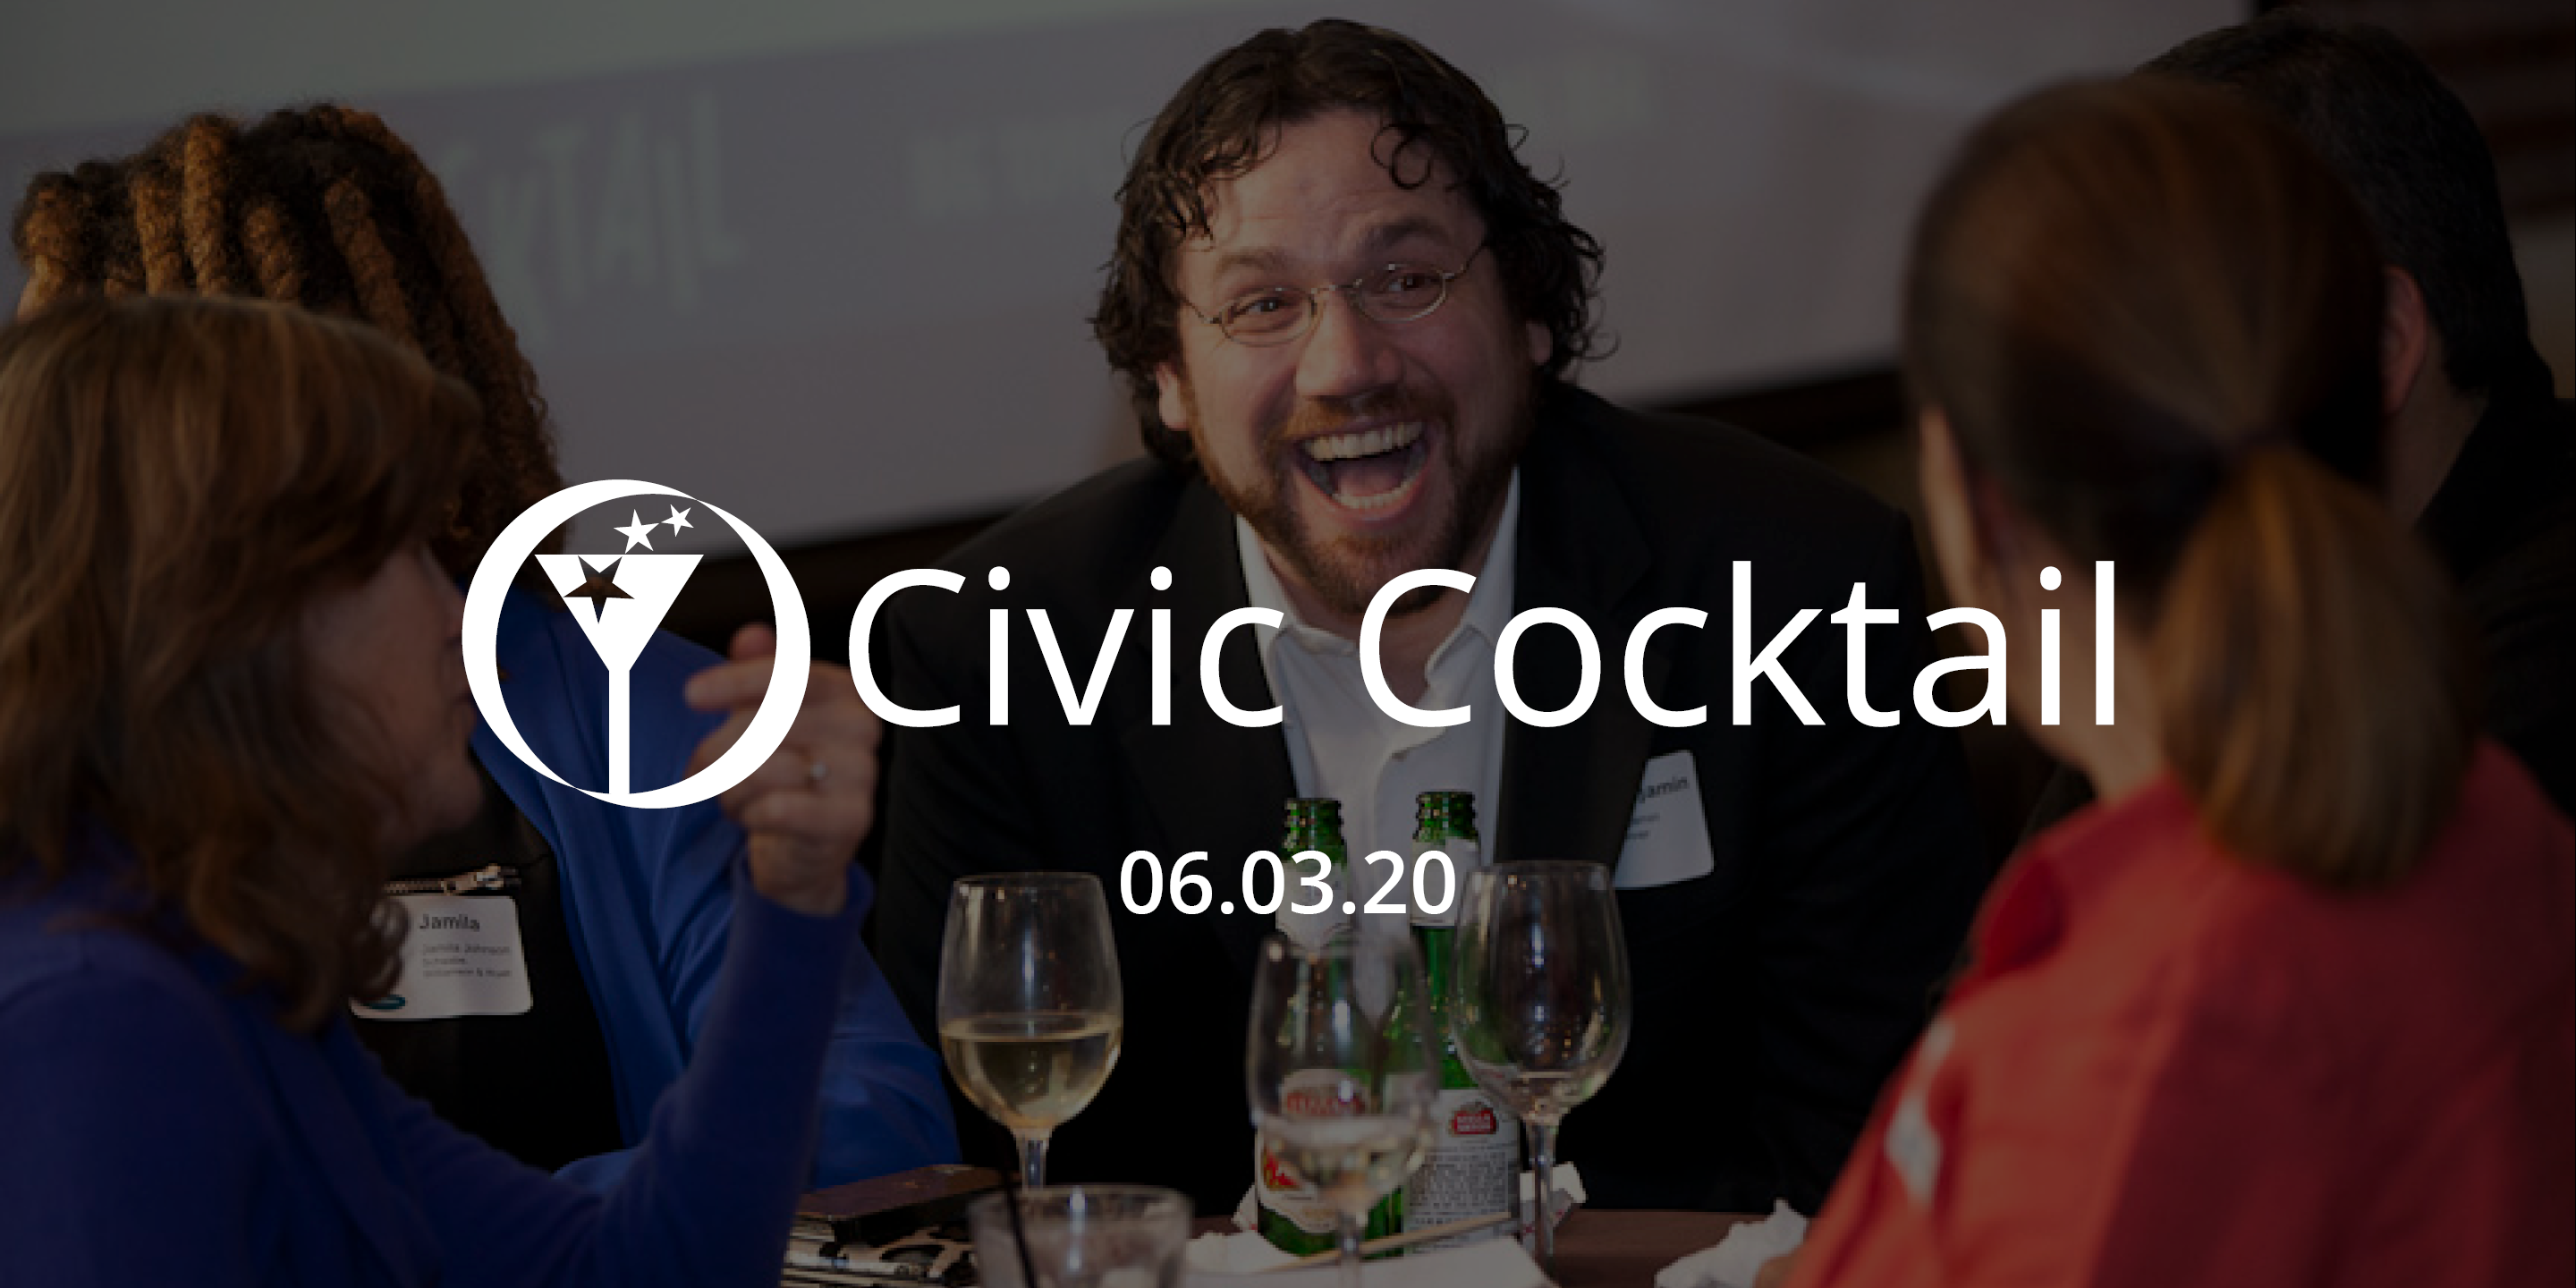 CityClub Civic Cocktail: June 3